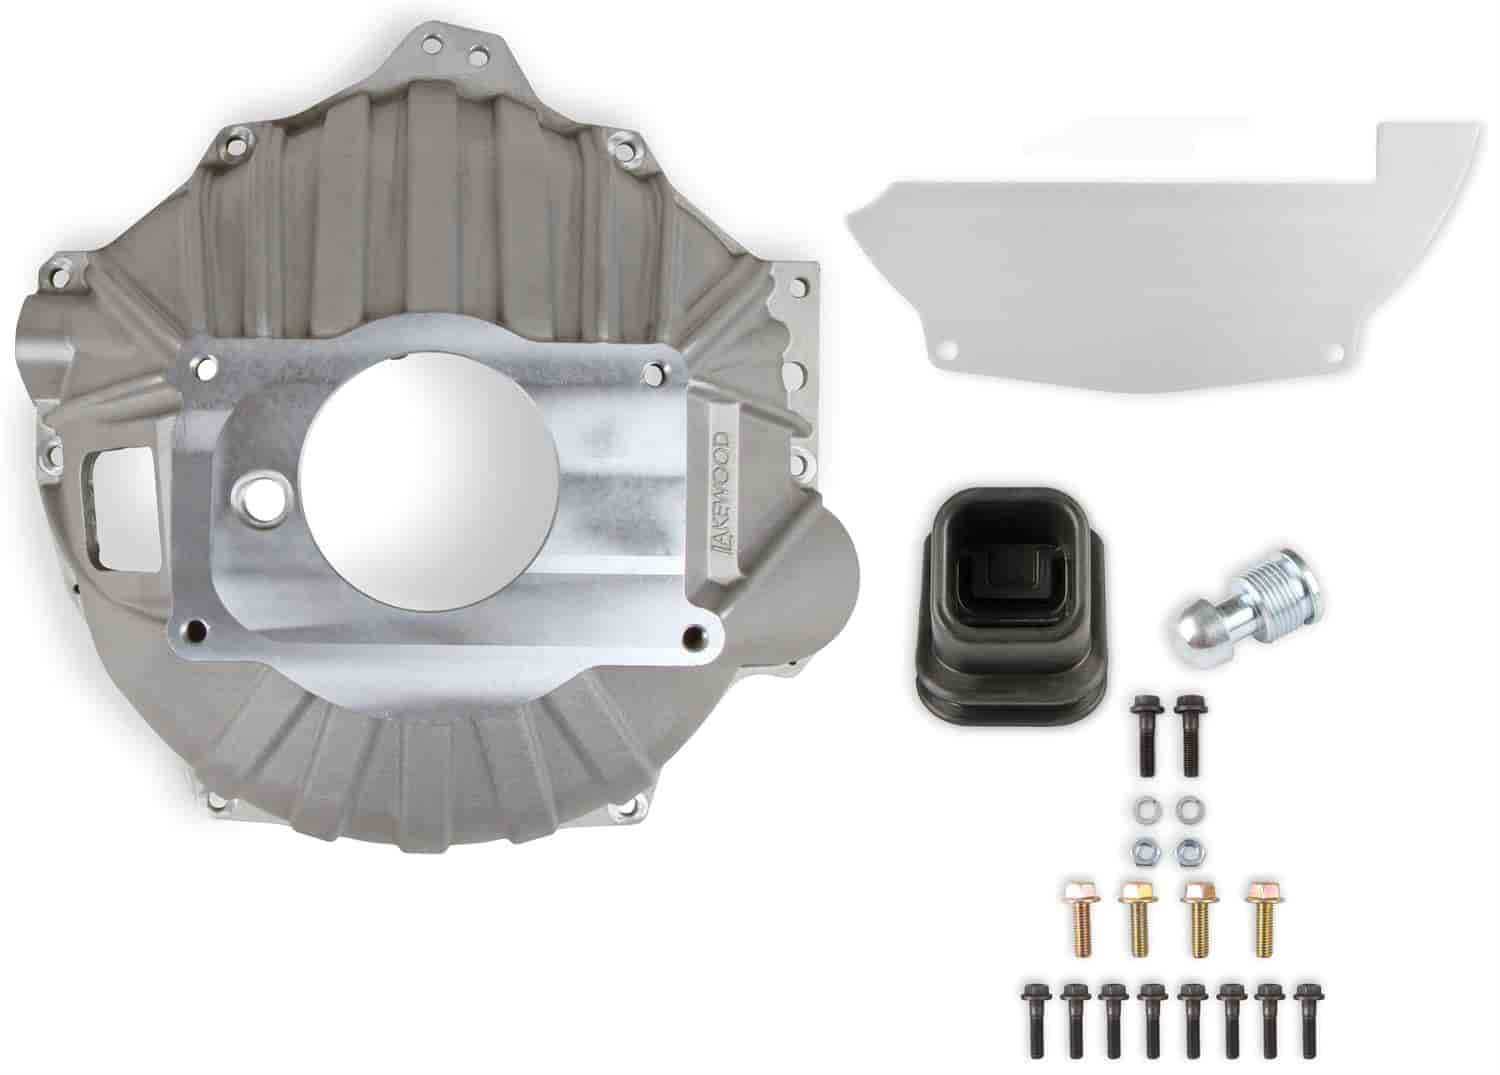 Cast-Aluminum Bellhousing Kit for GM LS Gen III/IV Engines